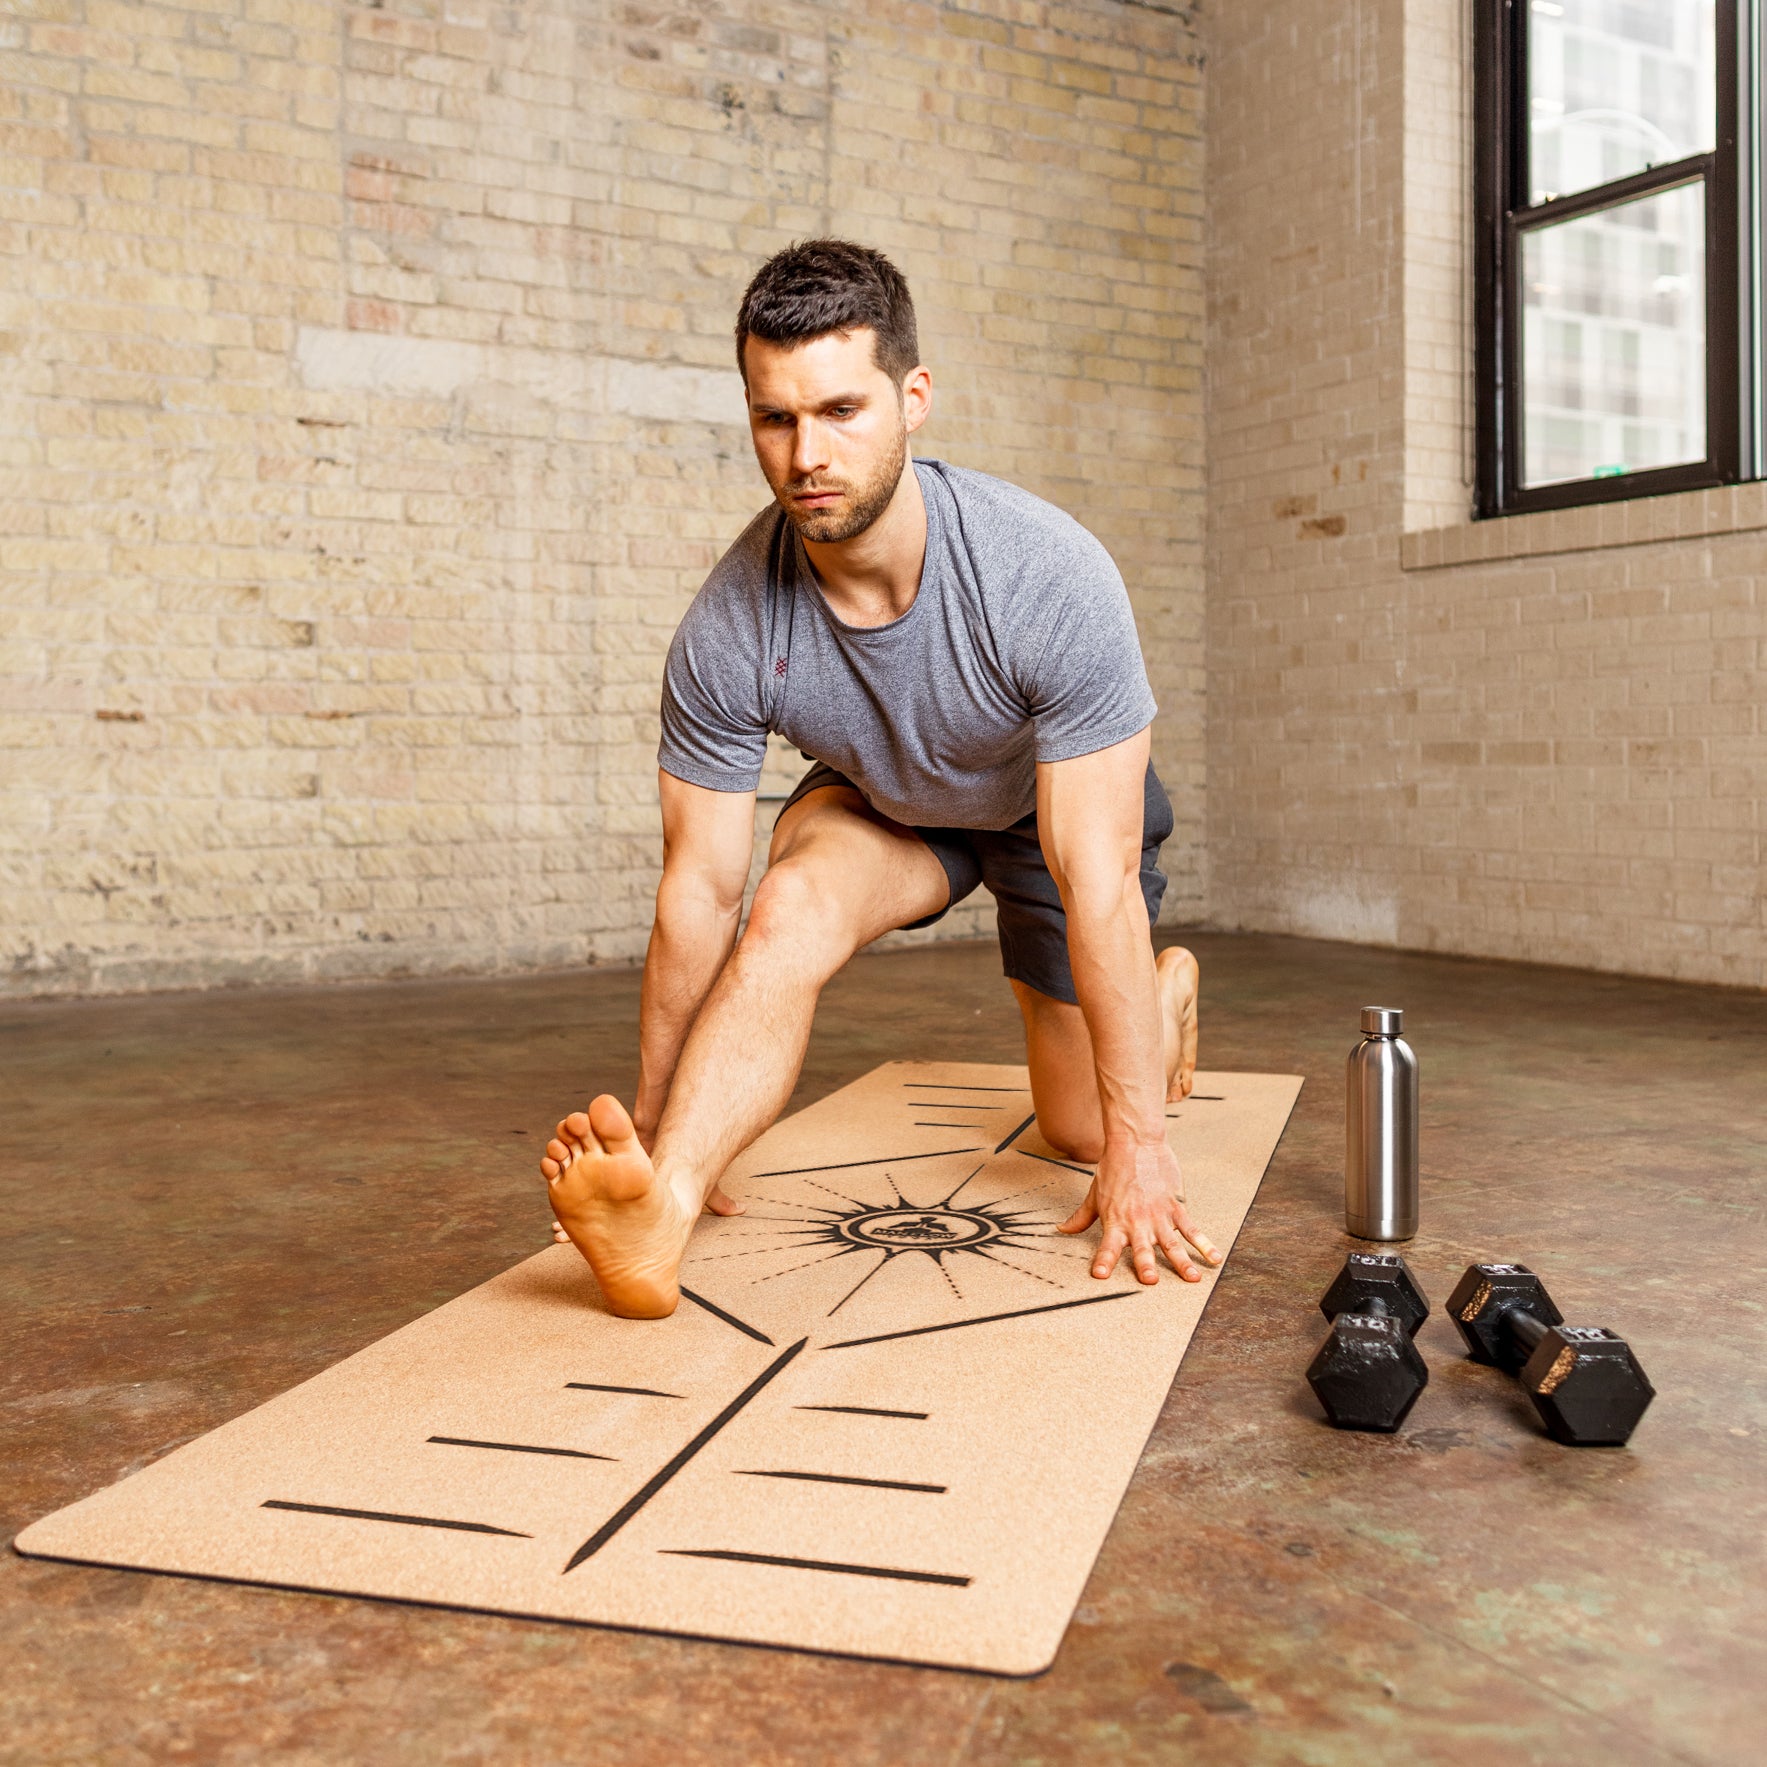 Yoga Mat Manufacturer Serves You With Highly Durable Yoga Mats